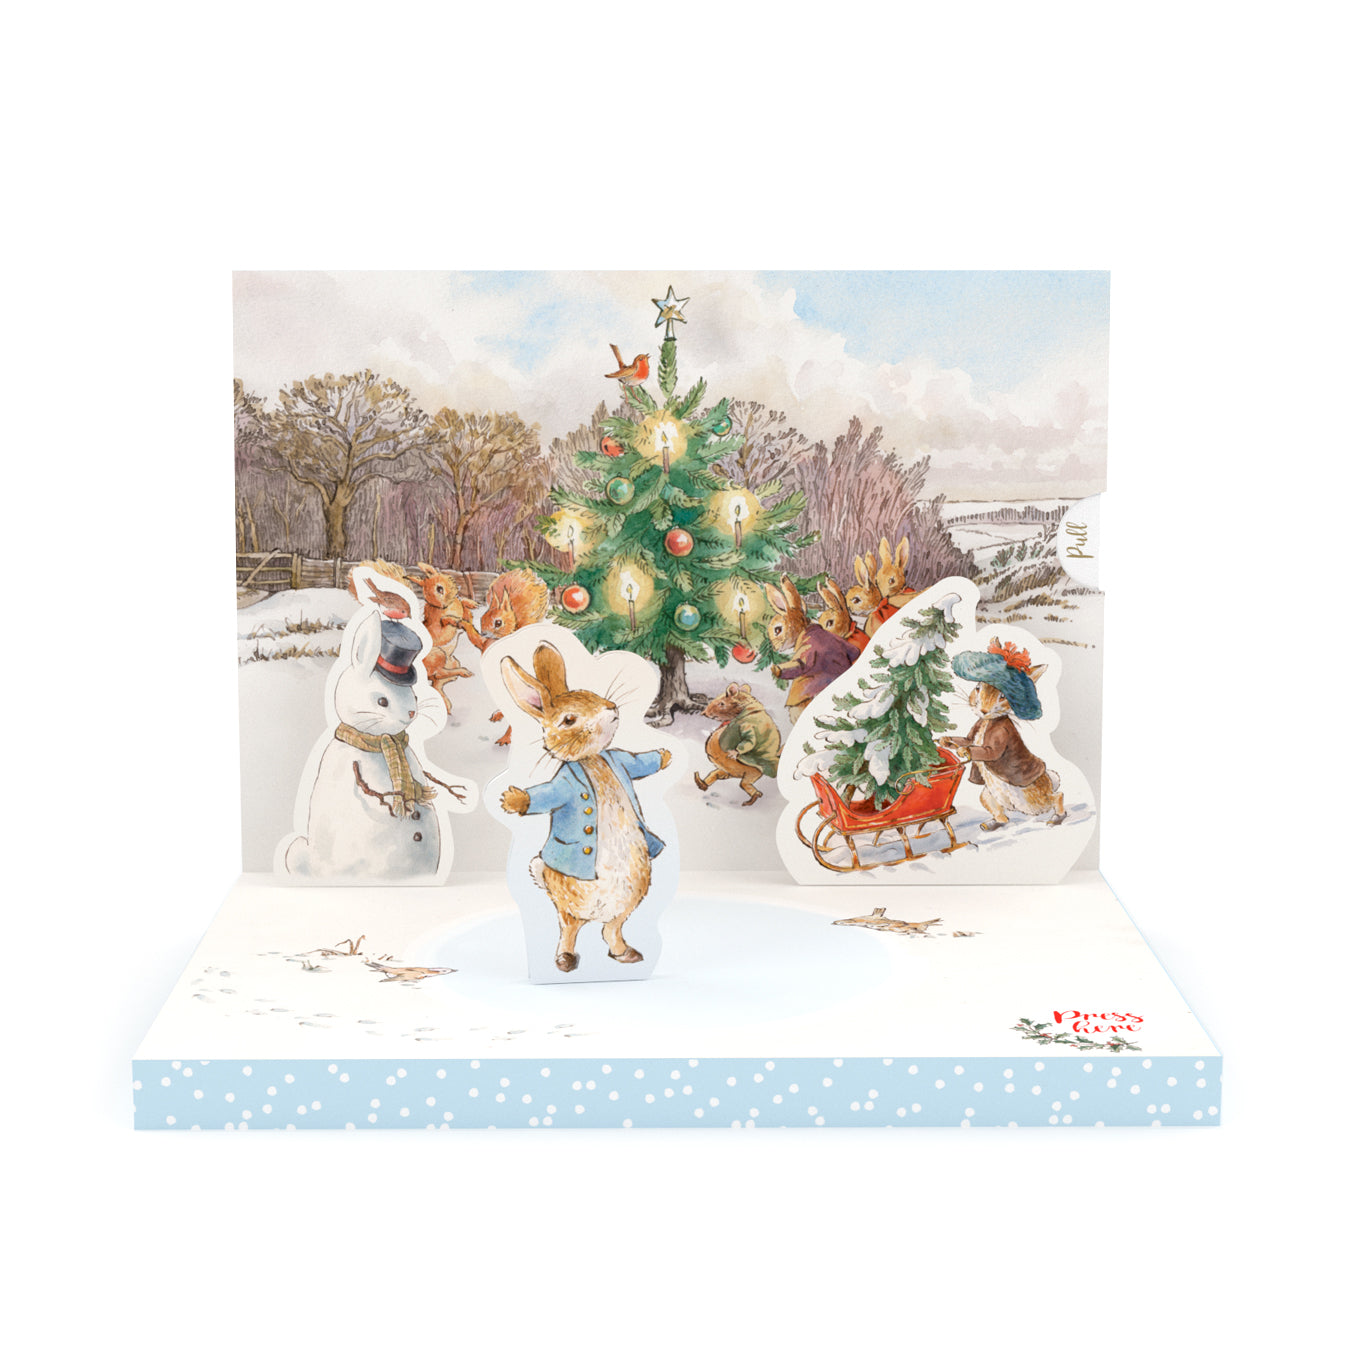 Peter Rabbit Music Box Christmas Card Novelty Dancing Musical Cards